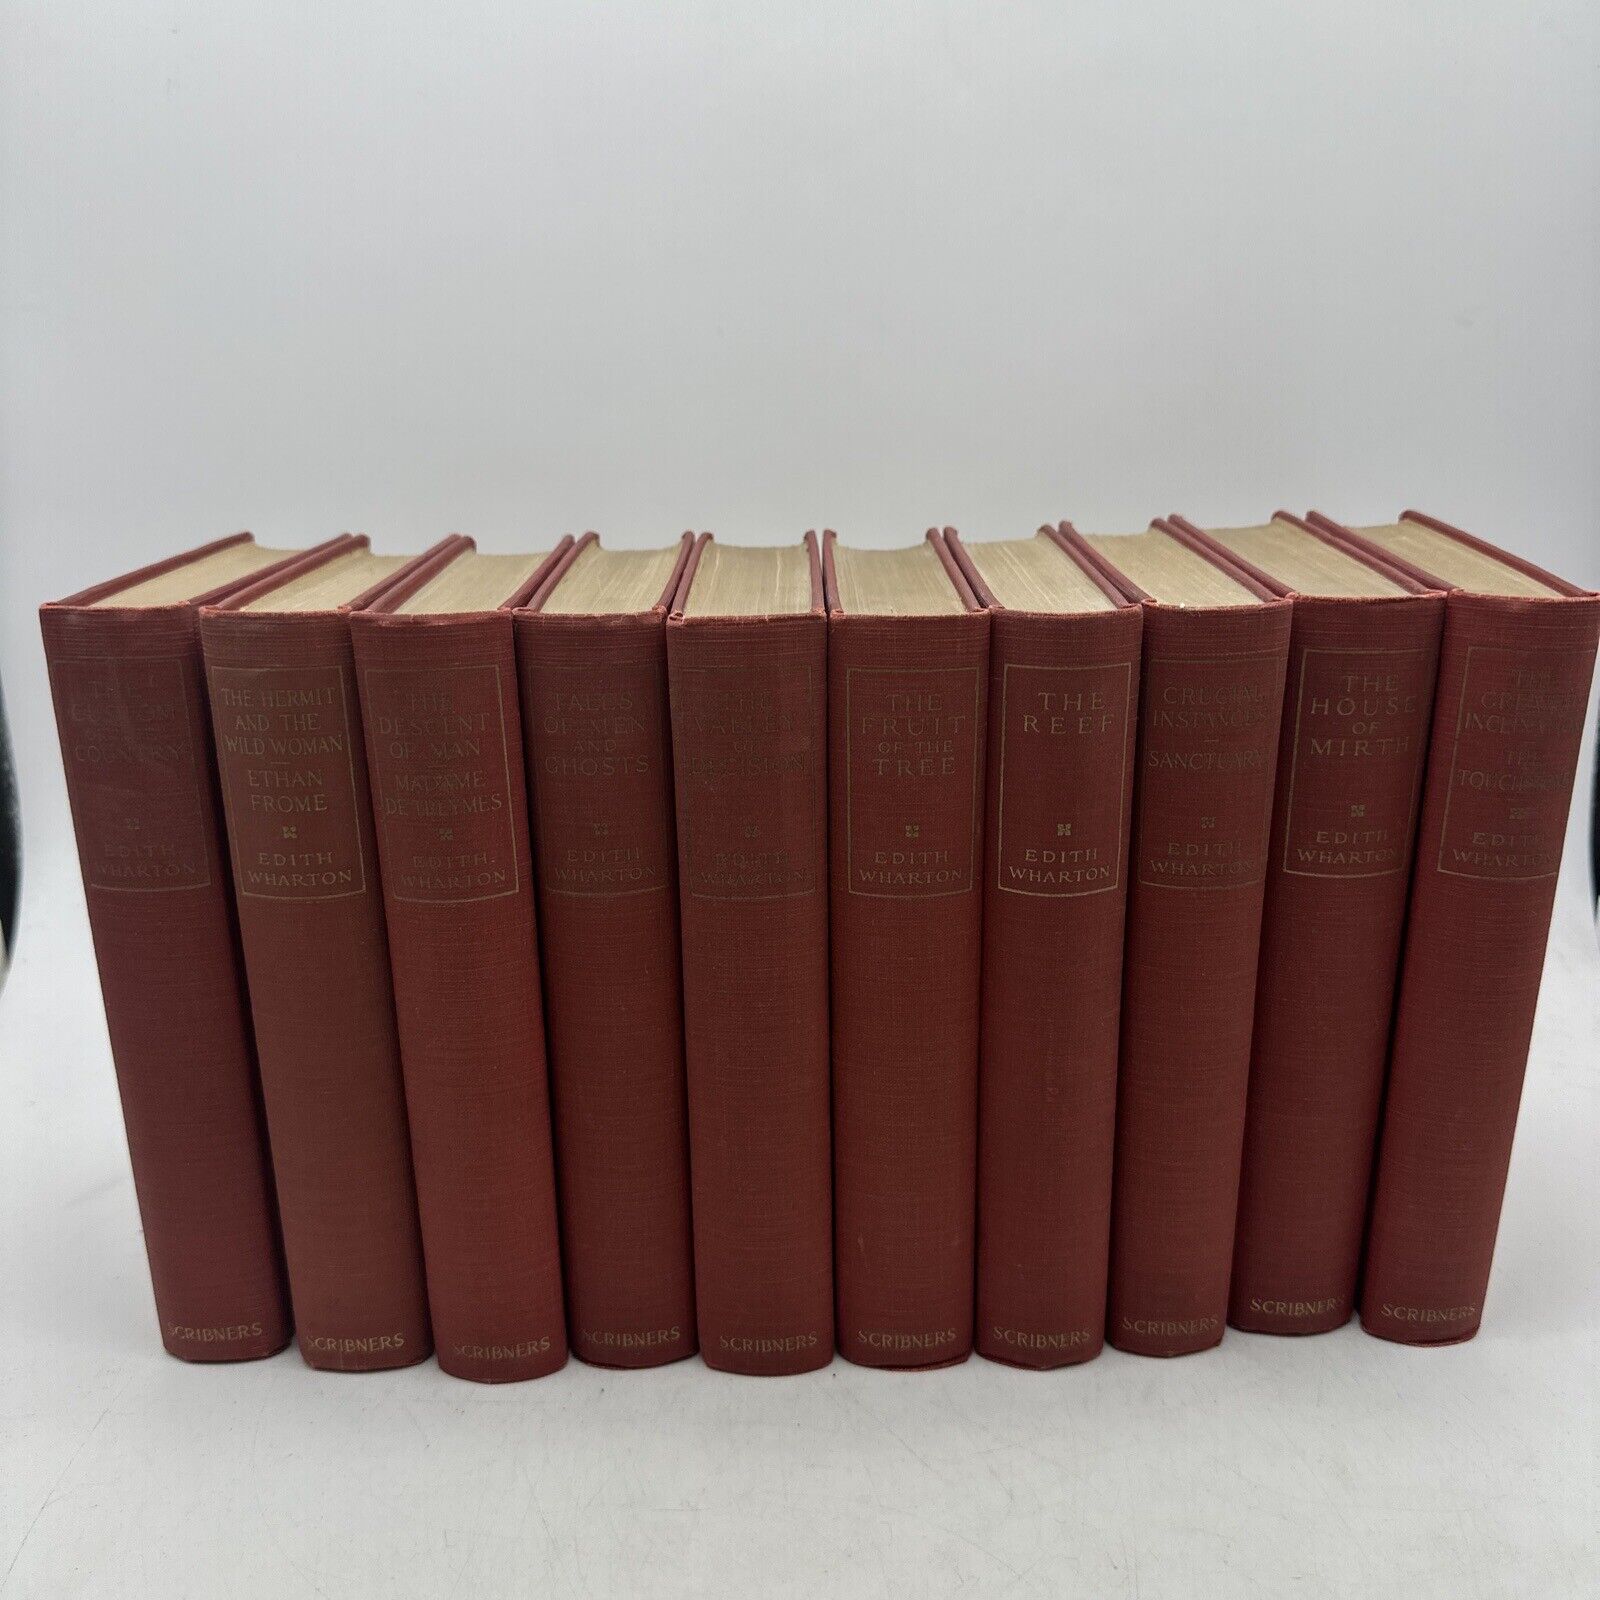 Vintage Edith Wharton 10 Volumes - 1914 - VG